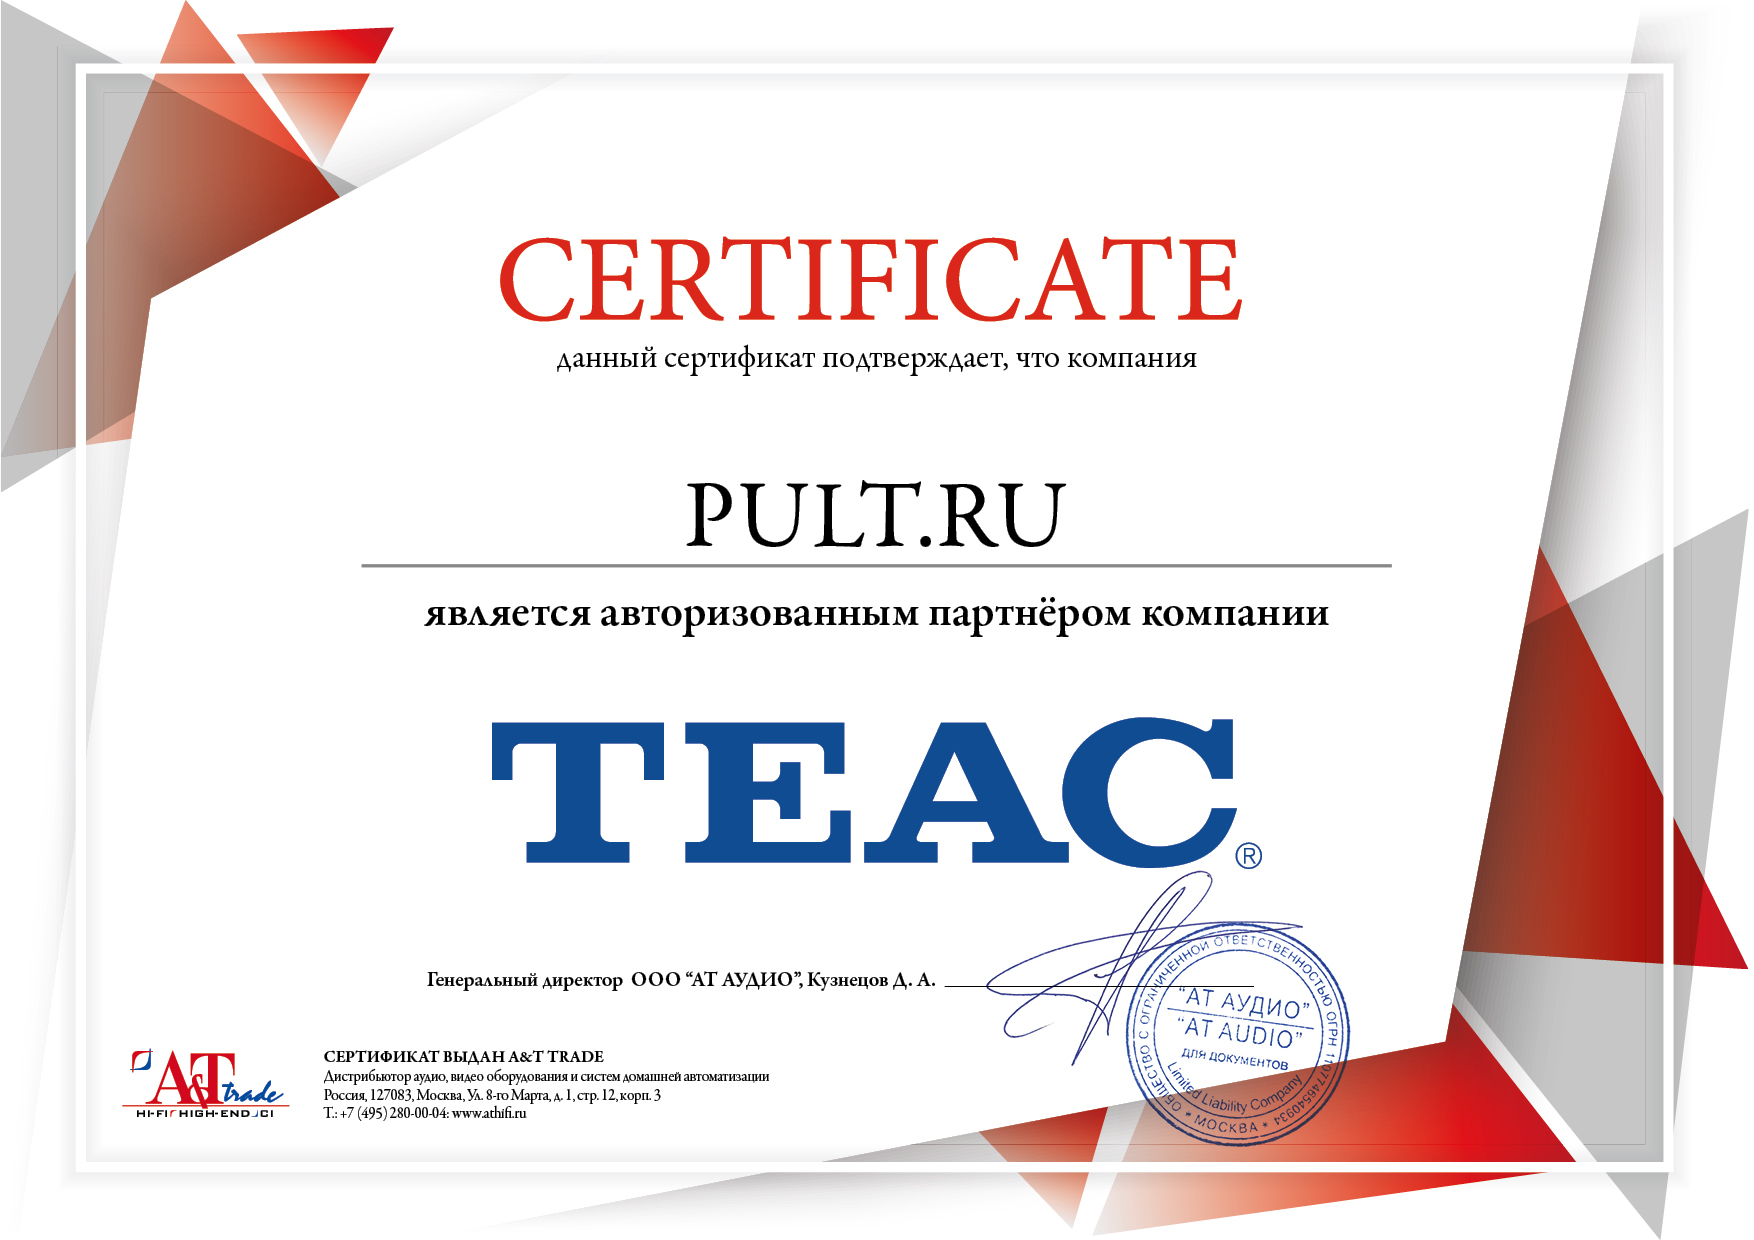 Сертификат Teac